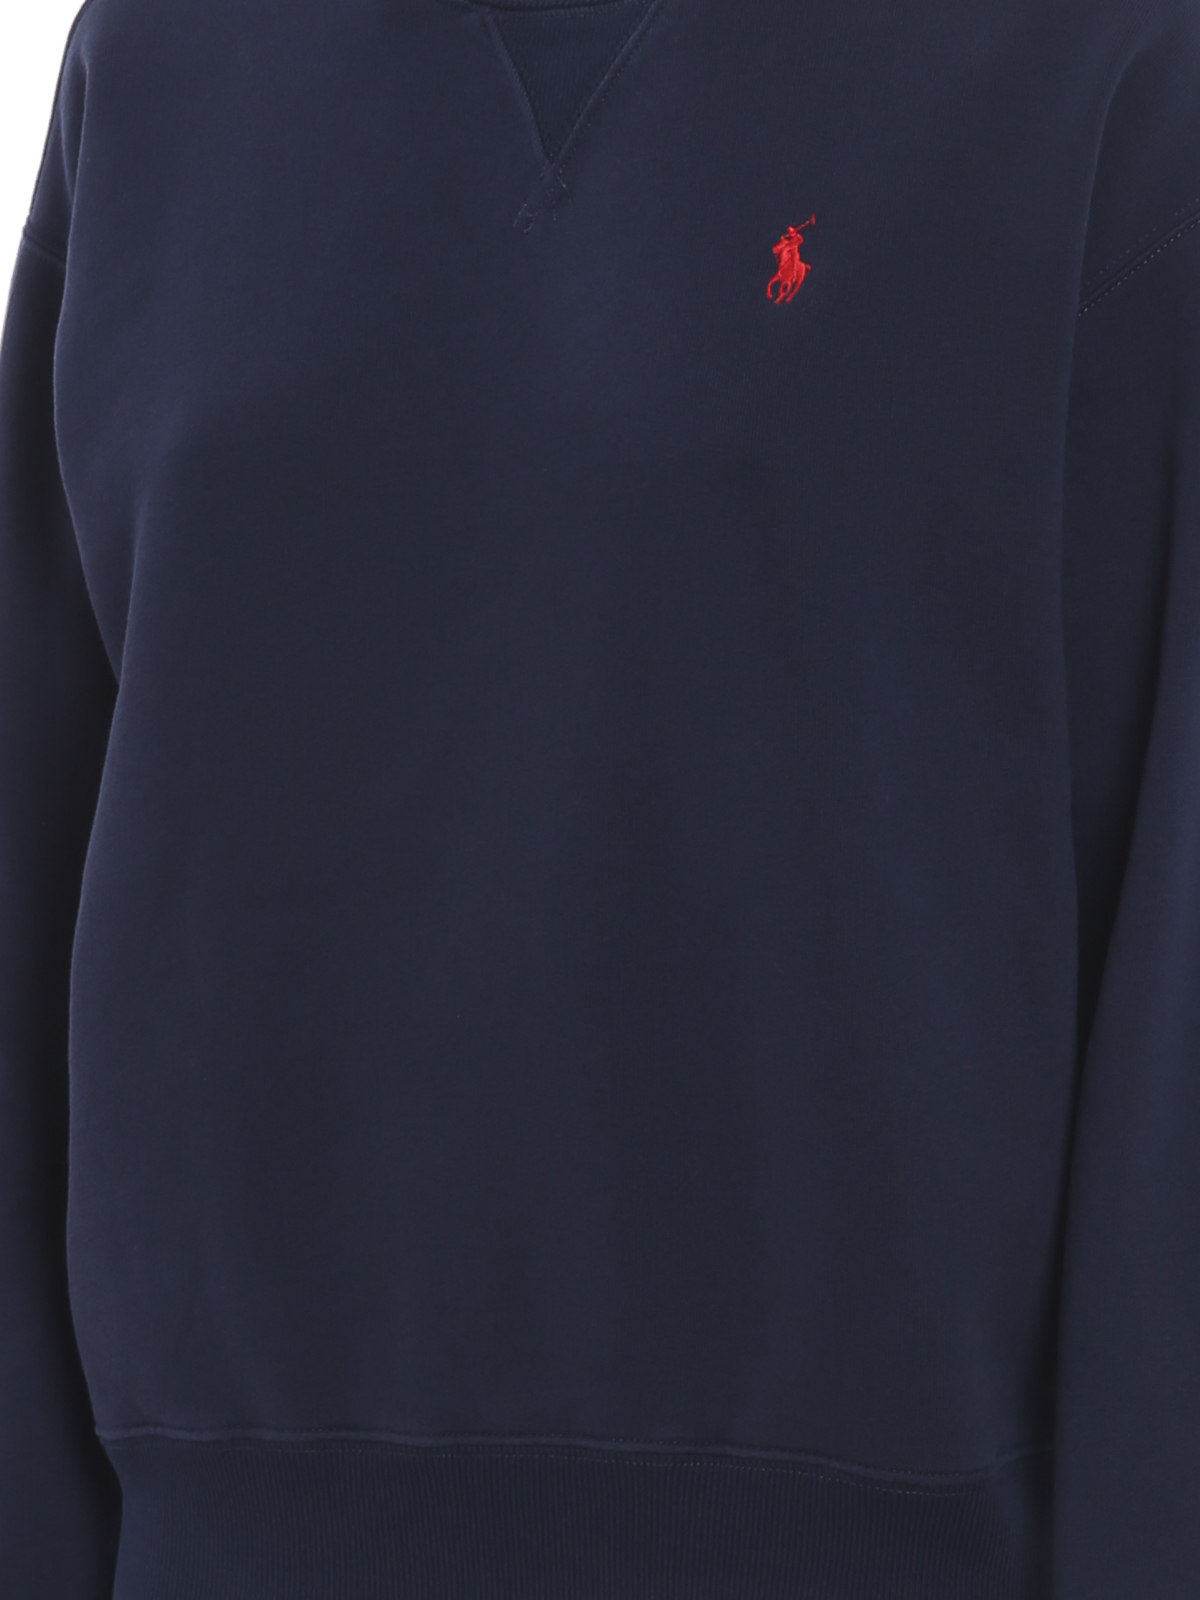 & Sweaters Polo Ralph Logo embroidery sweatshirt - 211794395003